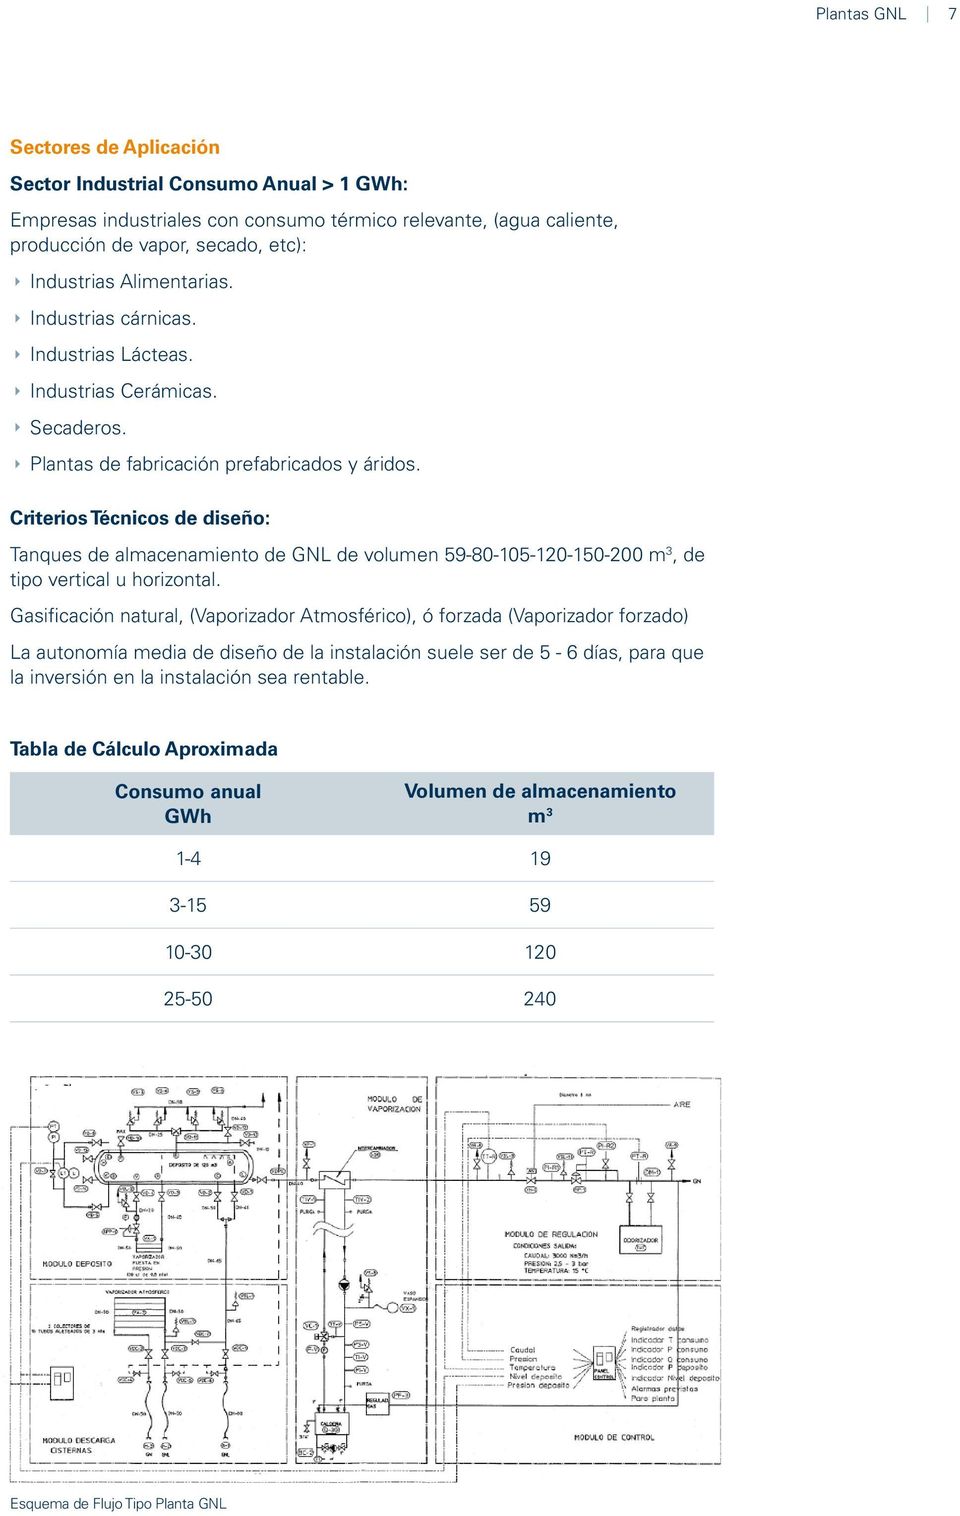 Criterios Técnicos de diseño: Tanques de almacenamiento de GNL de volumen 59-80-105-120-150-200 m 3, de tipo vertical u horizontal.